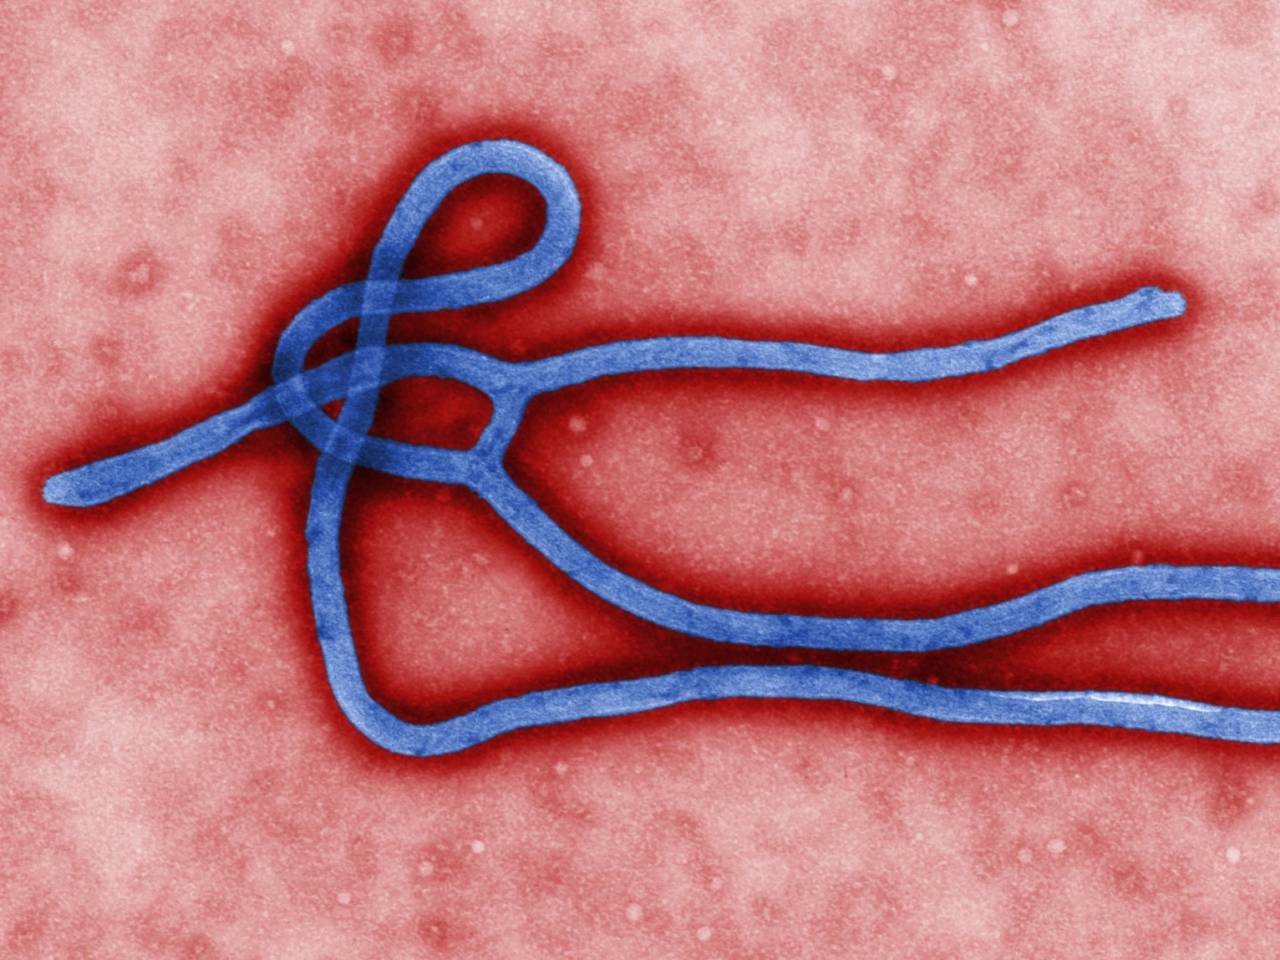 ebola-outbreak-west-africa